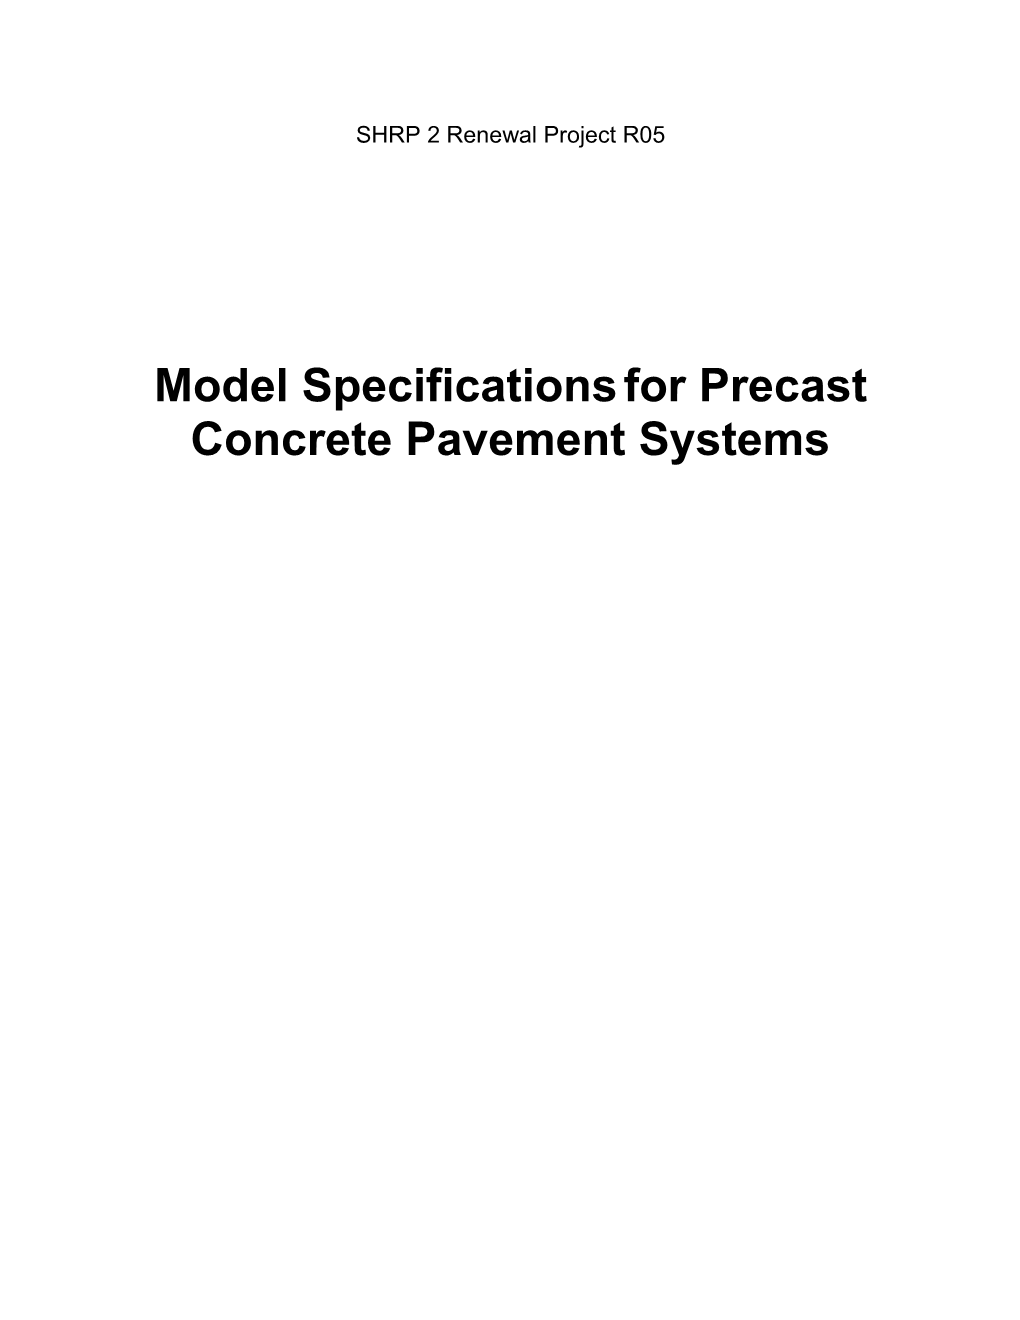 Model Specificationsfor Precast Concrete Pavement Systems